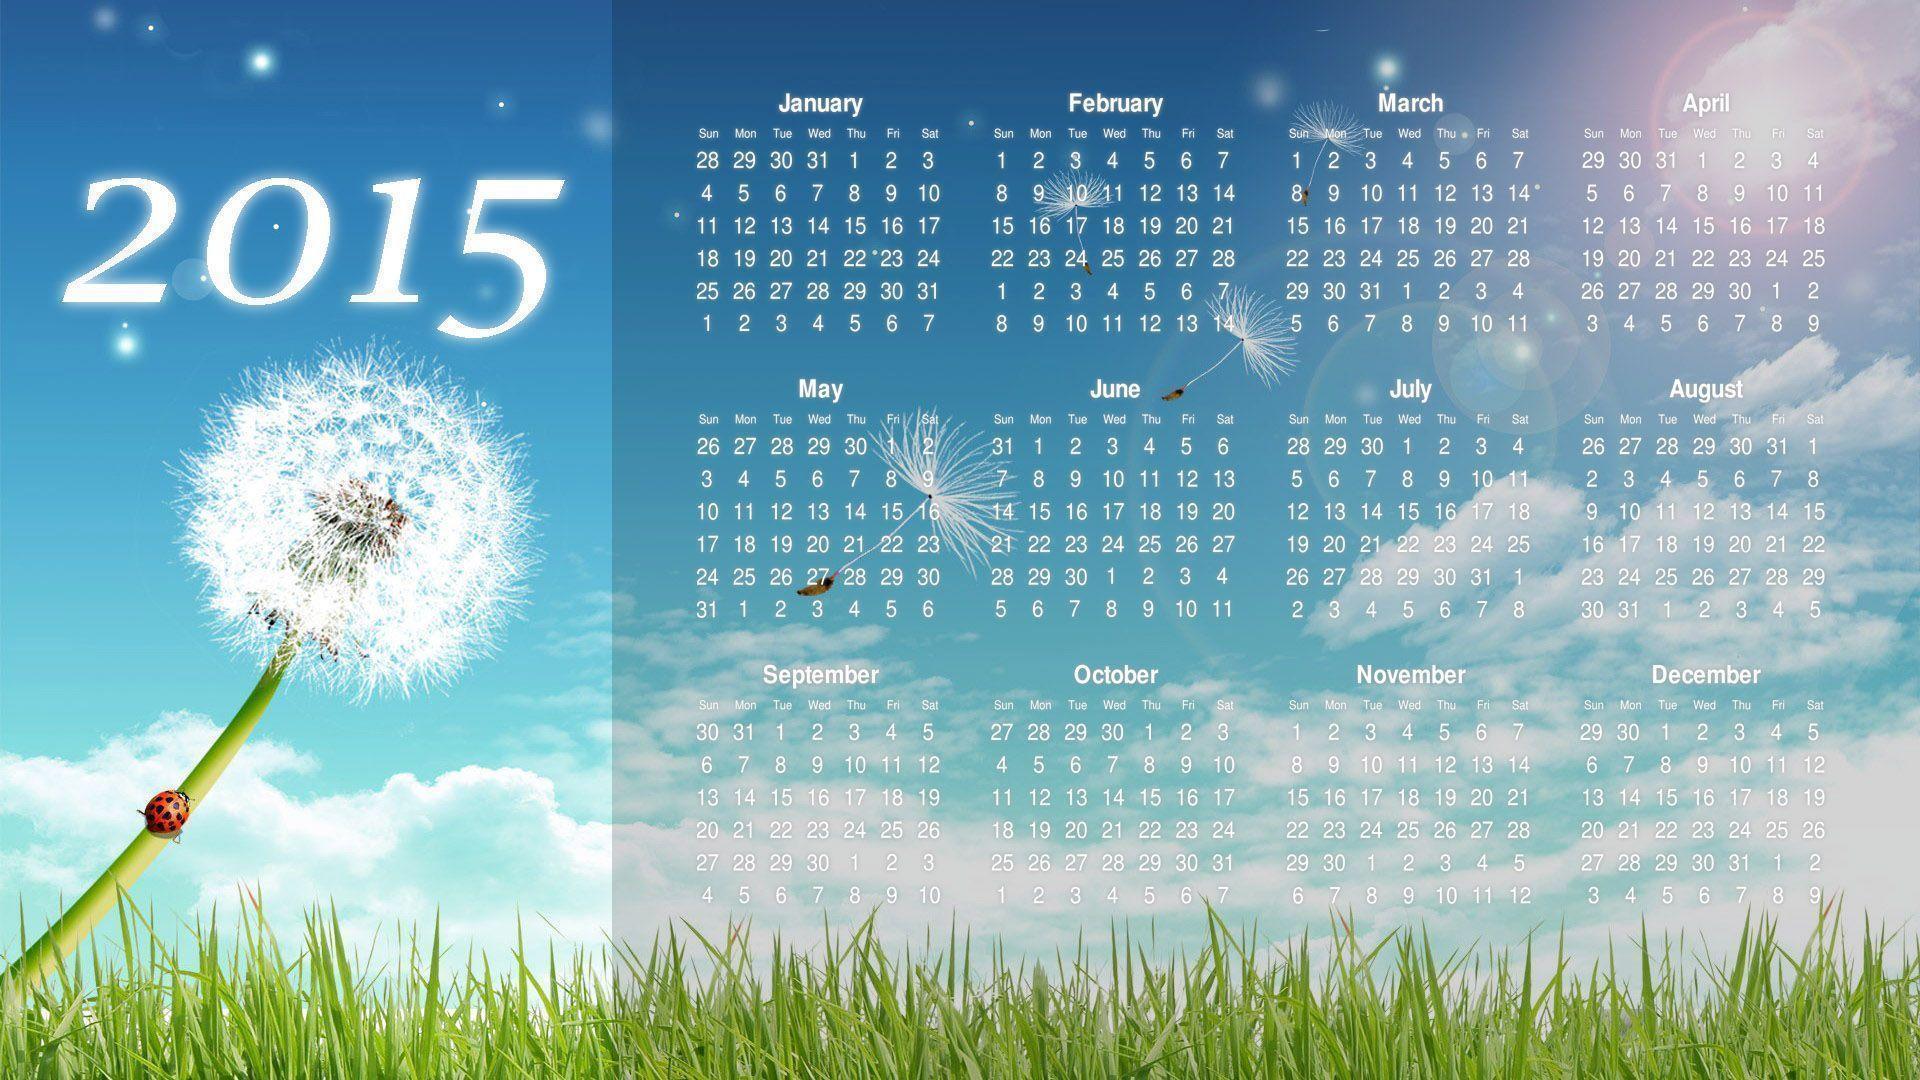 Calendar 2015 Wallpaper 2015 printable